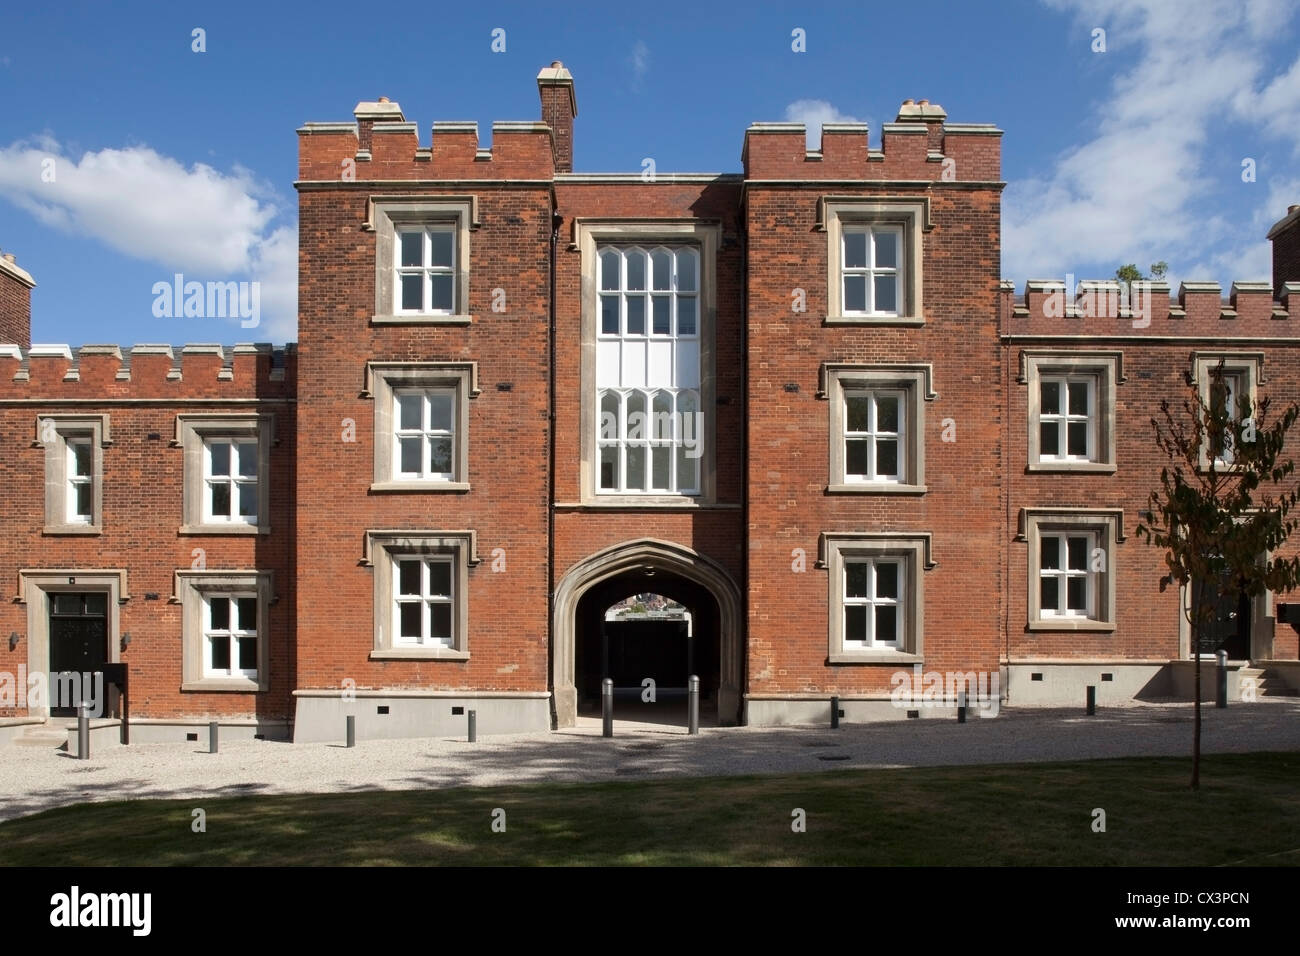 Royal Military Academy, London, United Kingdom. Architect: John McAslan & Partners, 2012. View of renovated part of academy. Stock Photo